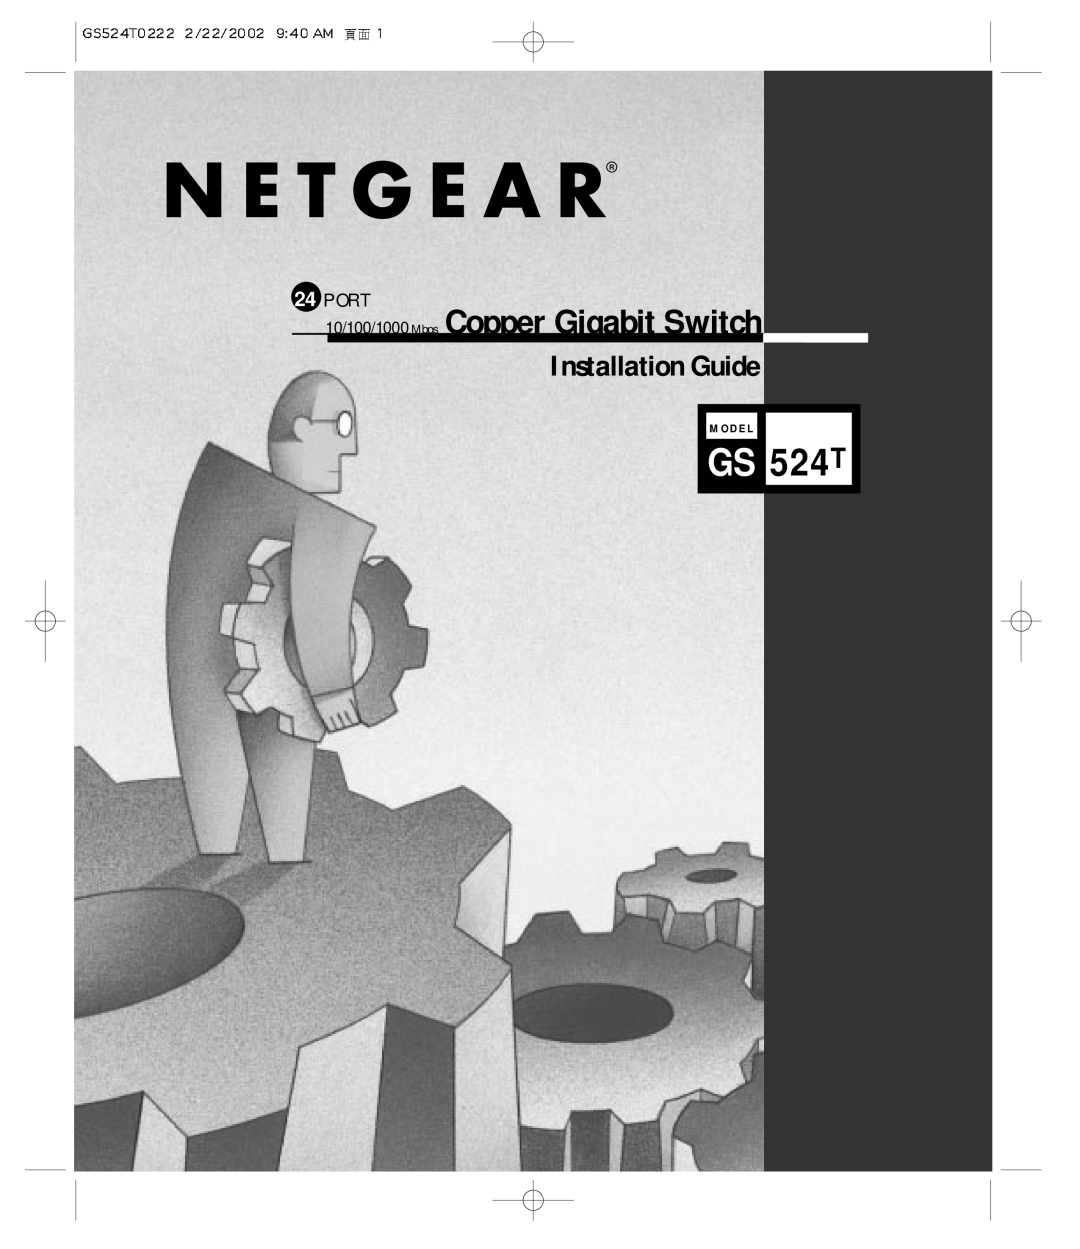 NETGEAR GS524T manual GS 524T, 10/100/1000Mbps Copper Gigabit Switch, Installation Guide, Port, M O D E L 